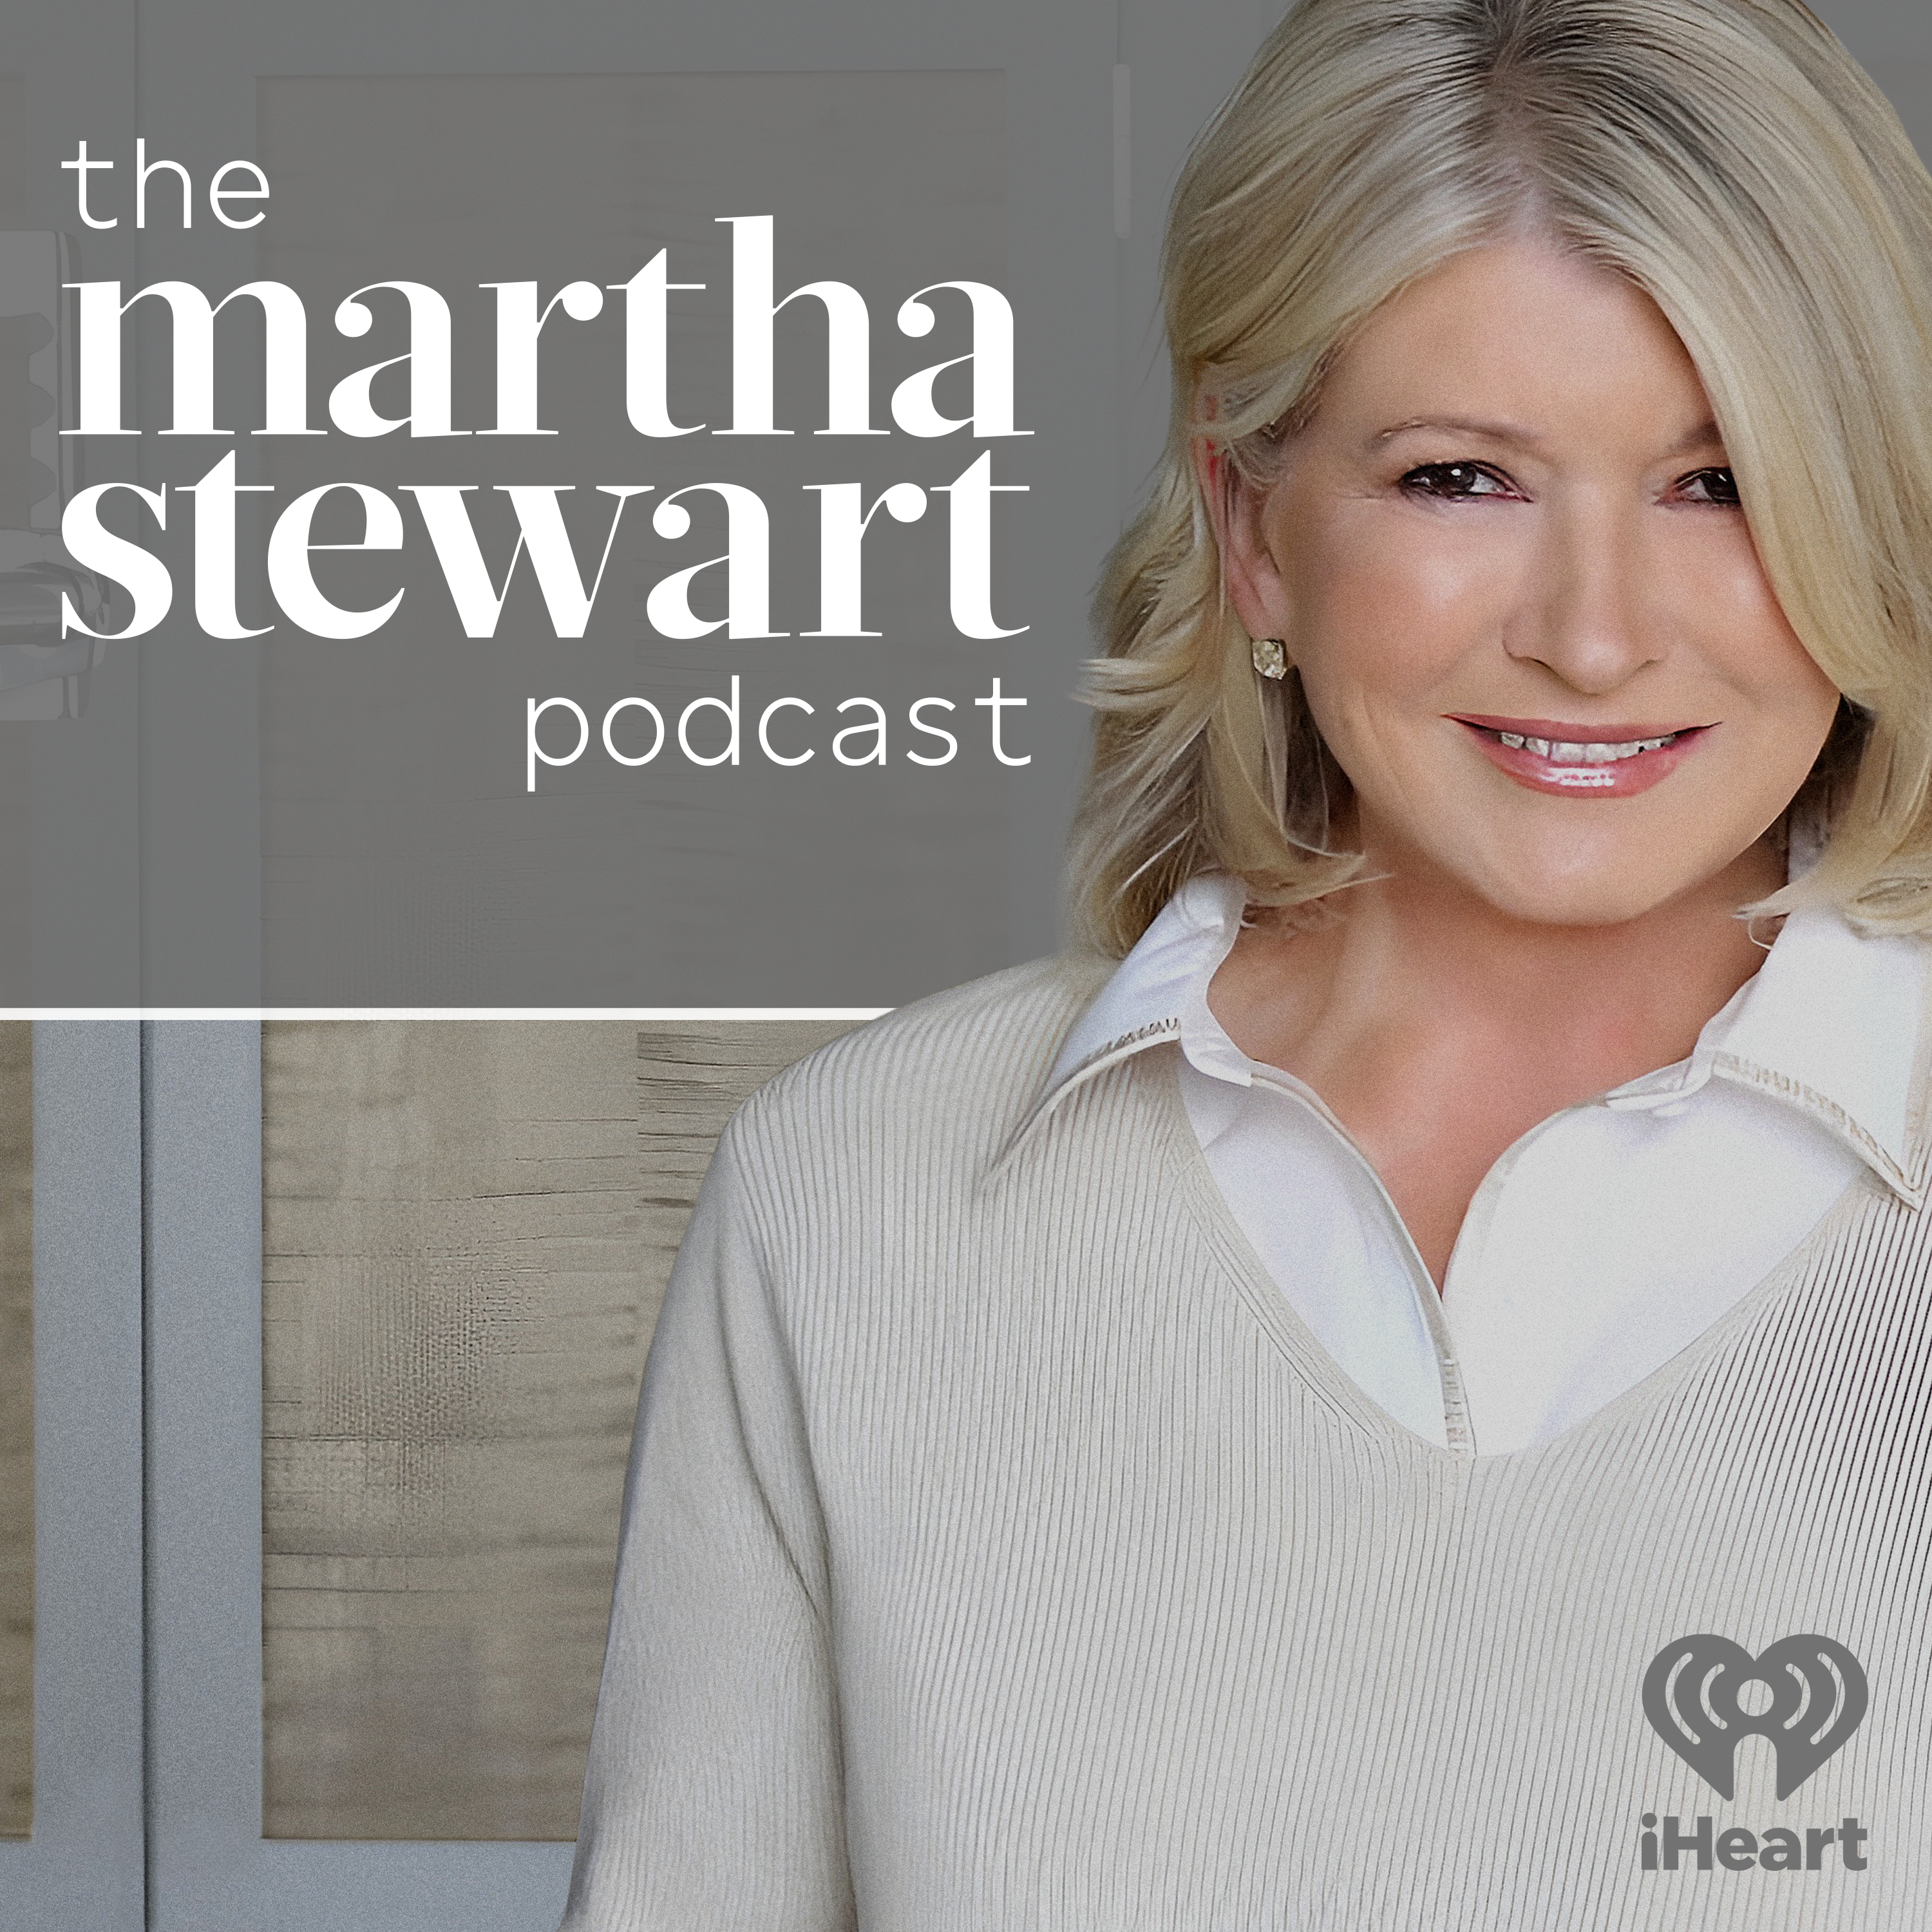 The Martha Stewart Podcast podcast show image